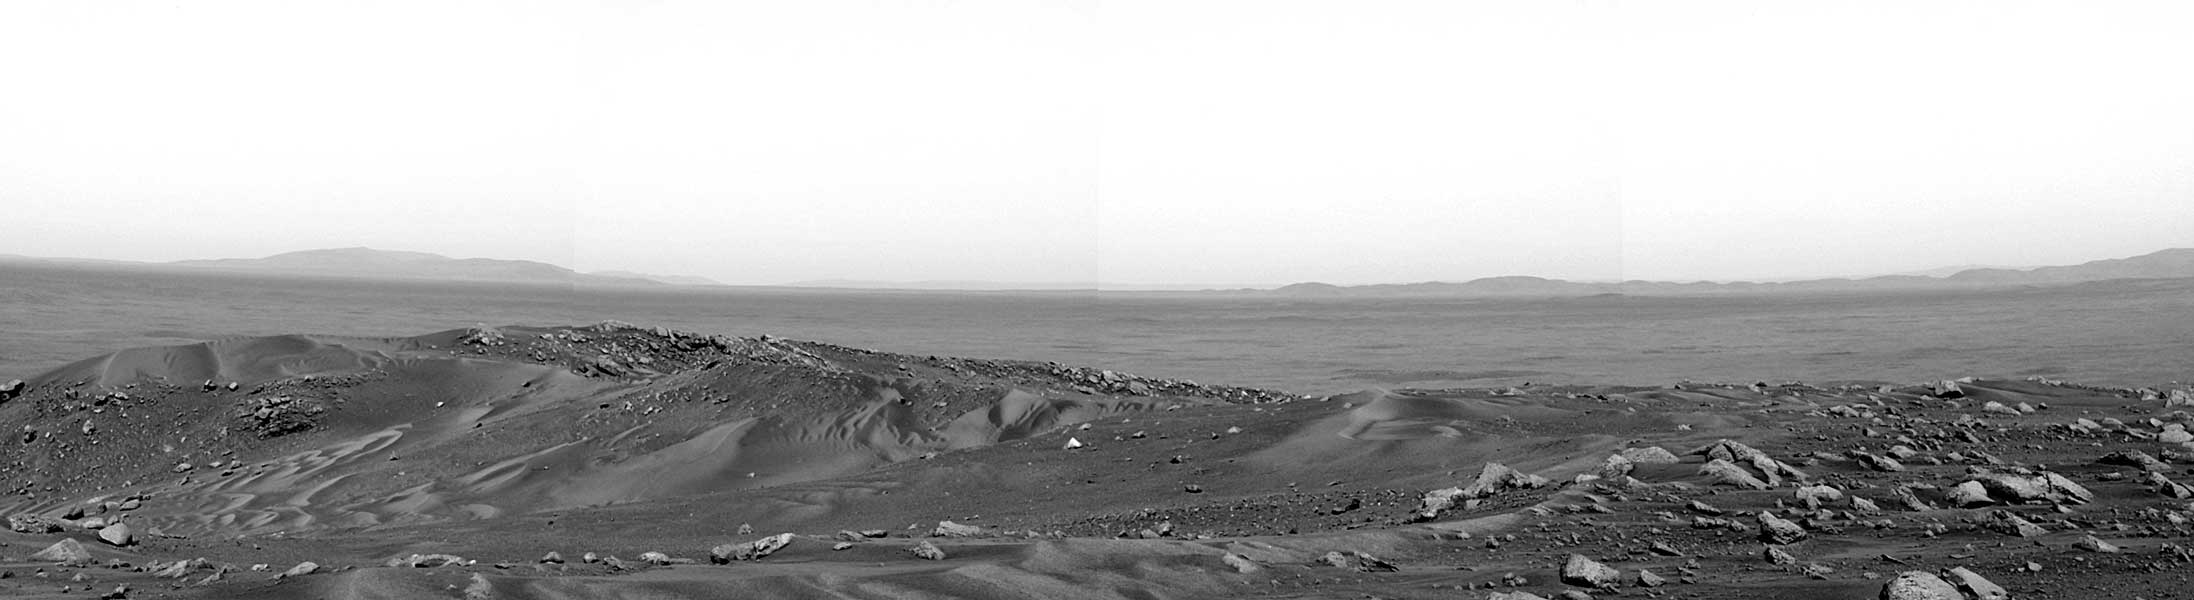 A View from Marido Hill em Marte